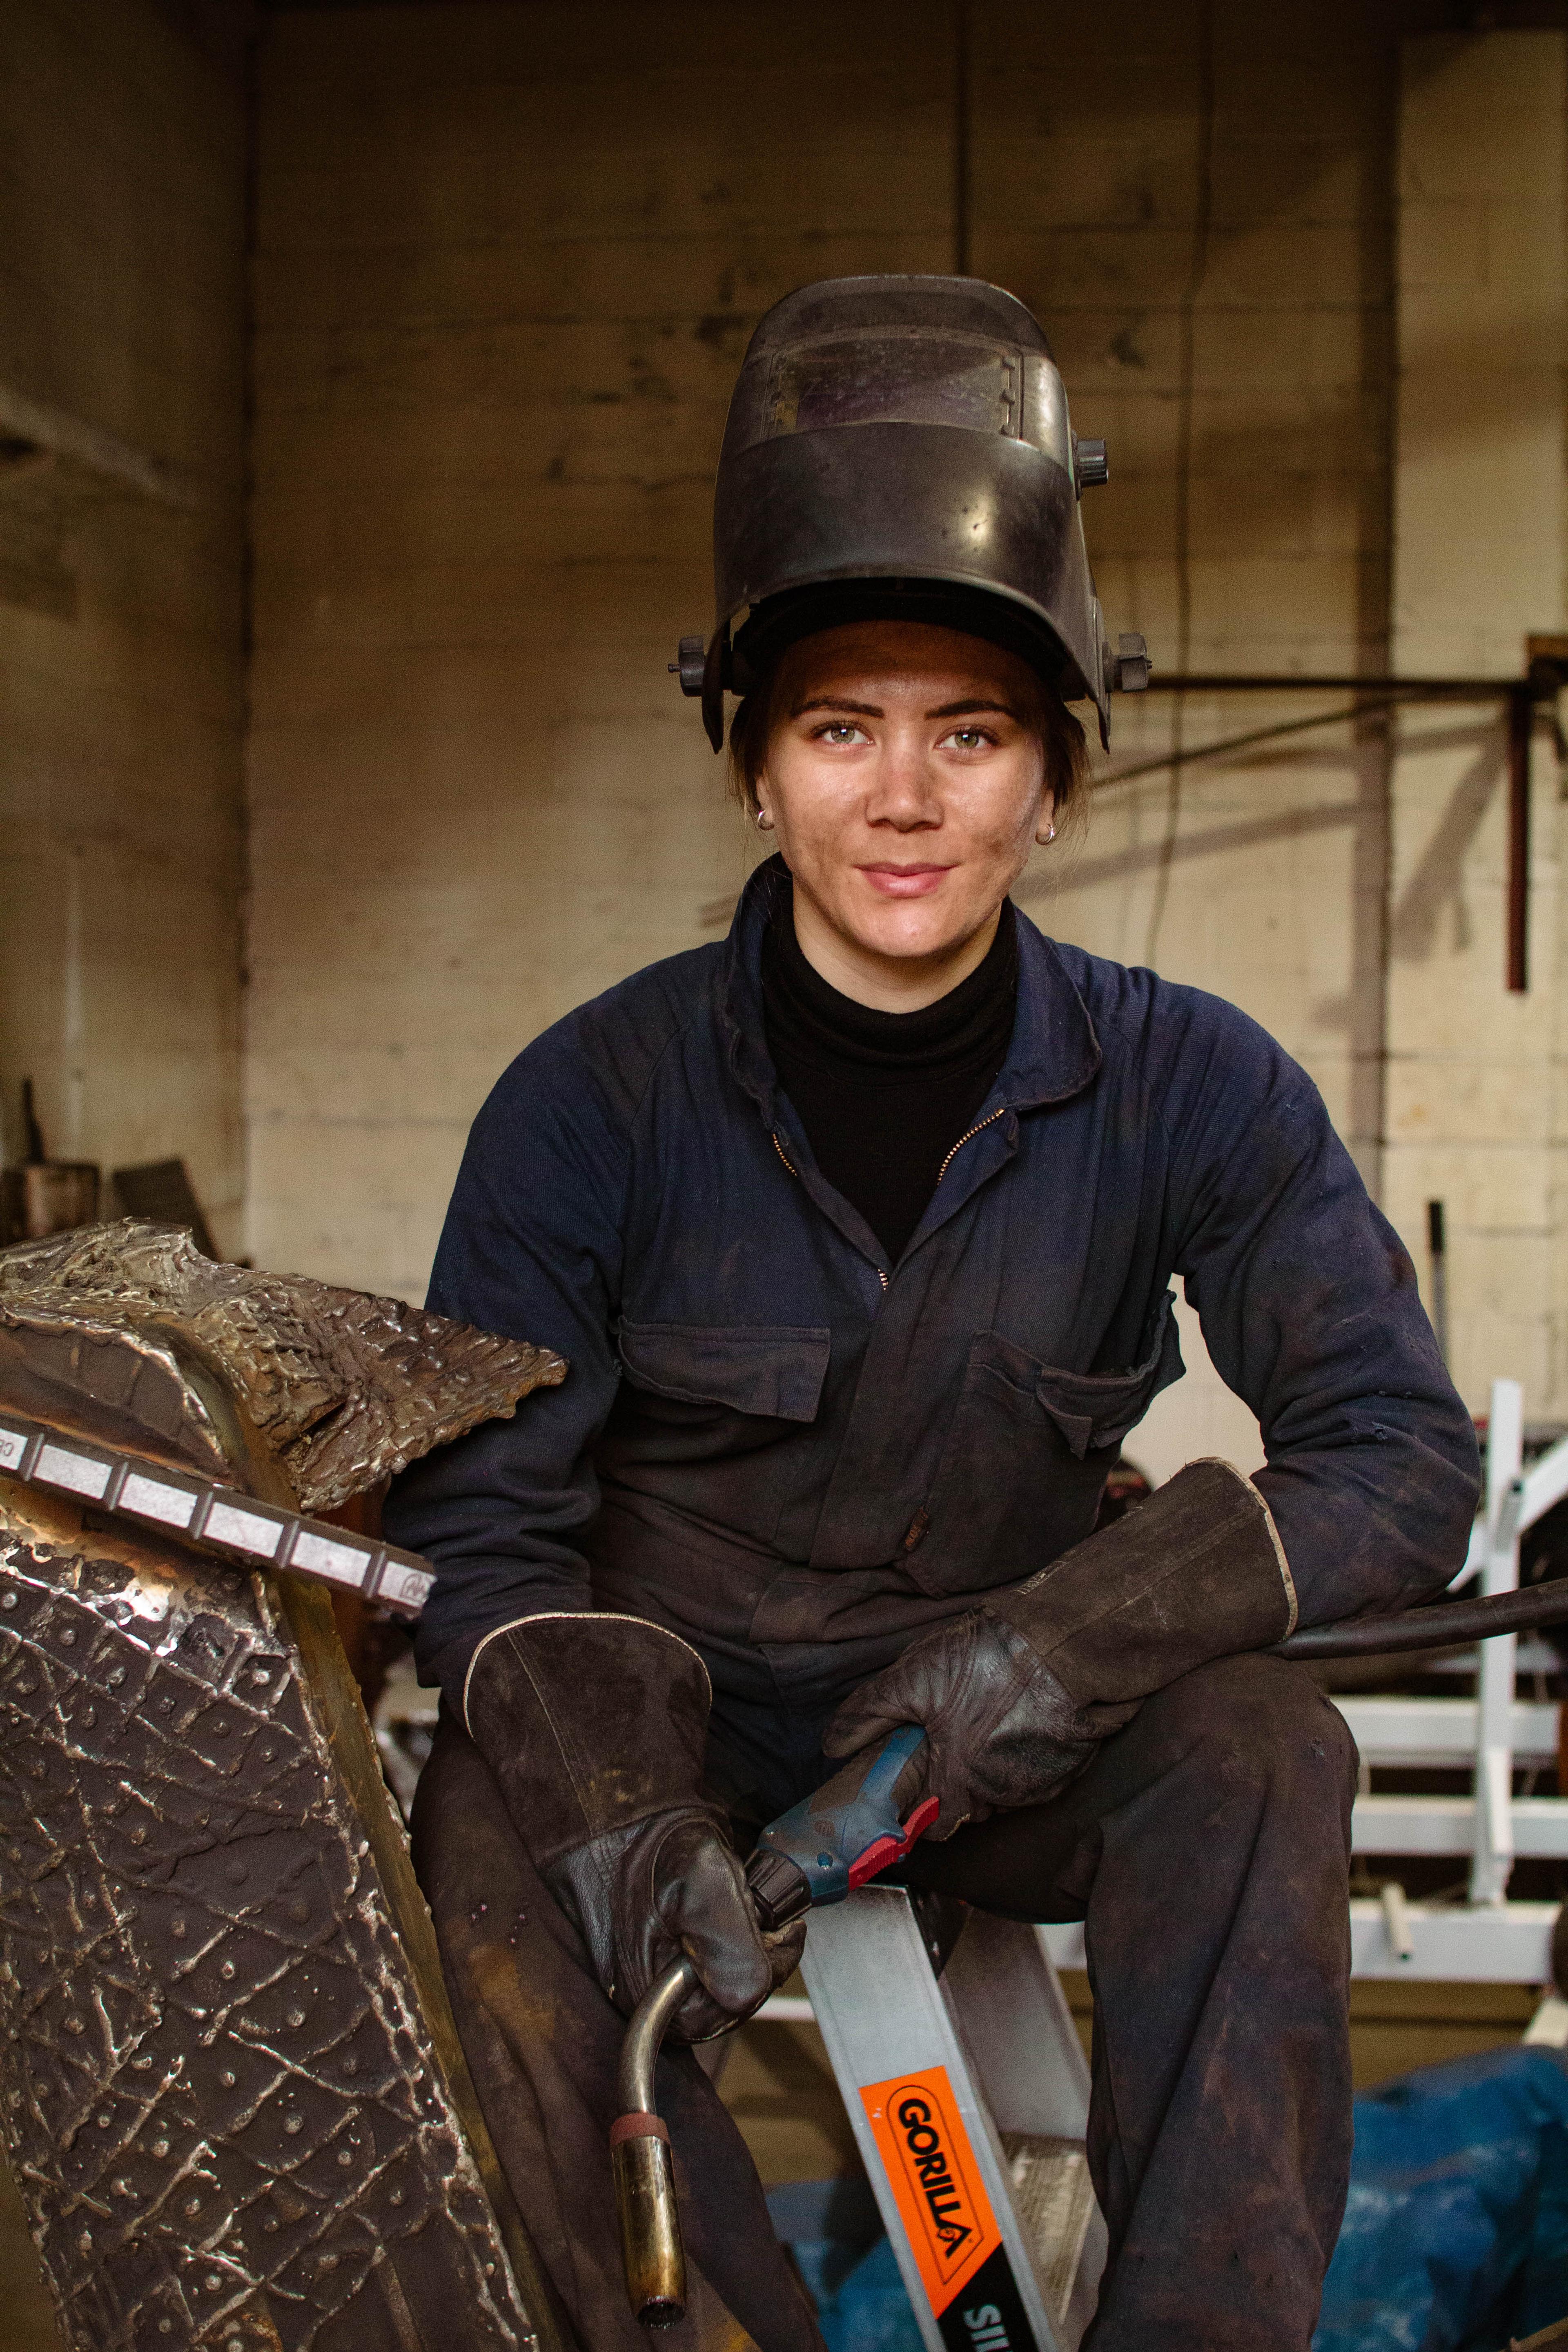 Theresa Wawatai – Apprentice Welder